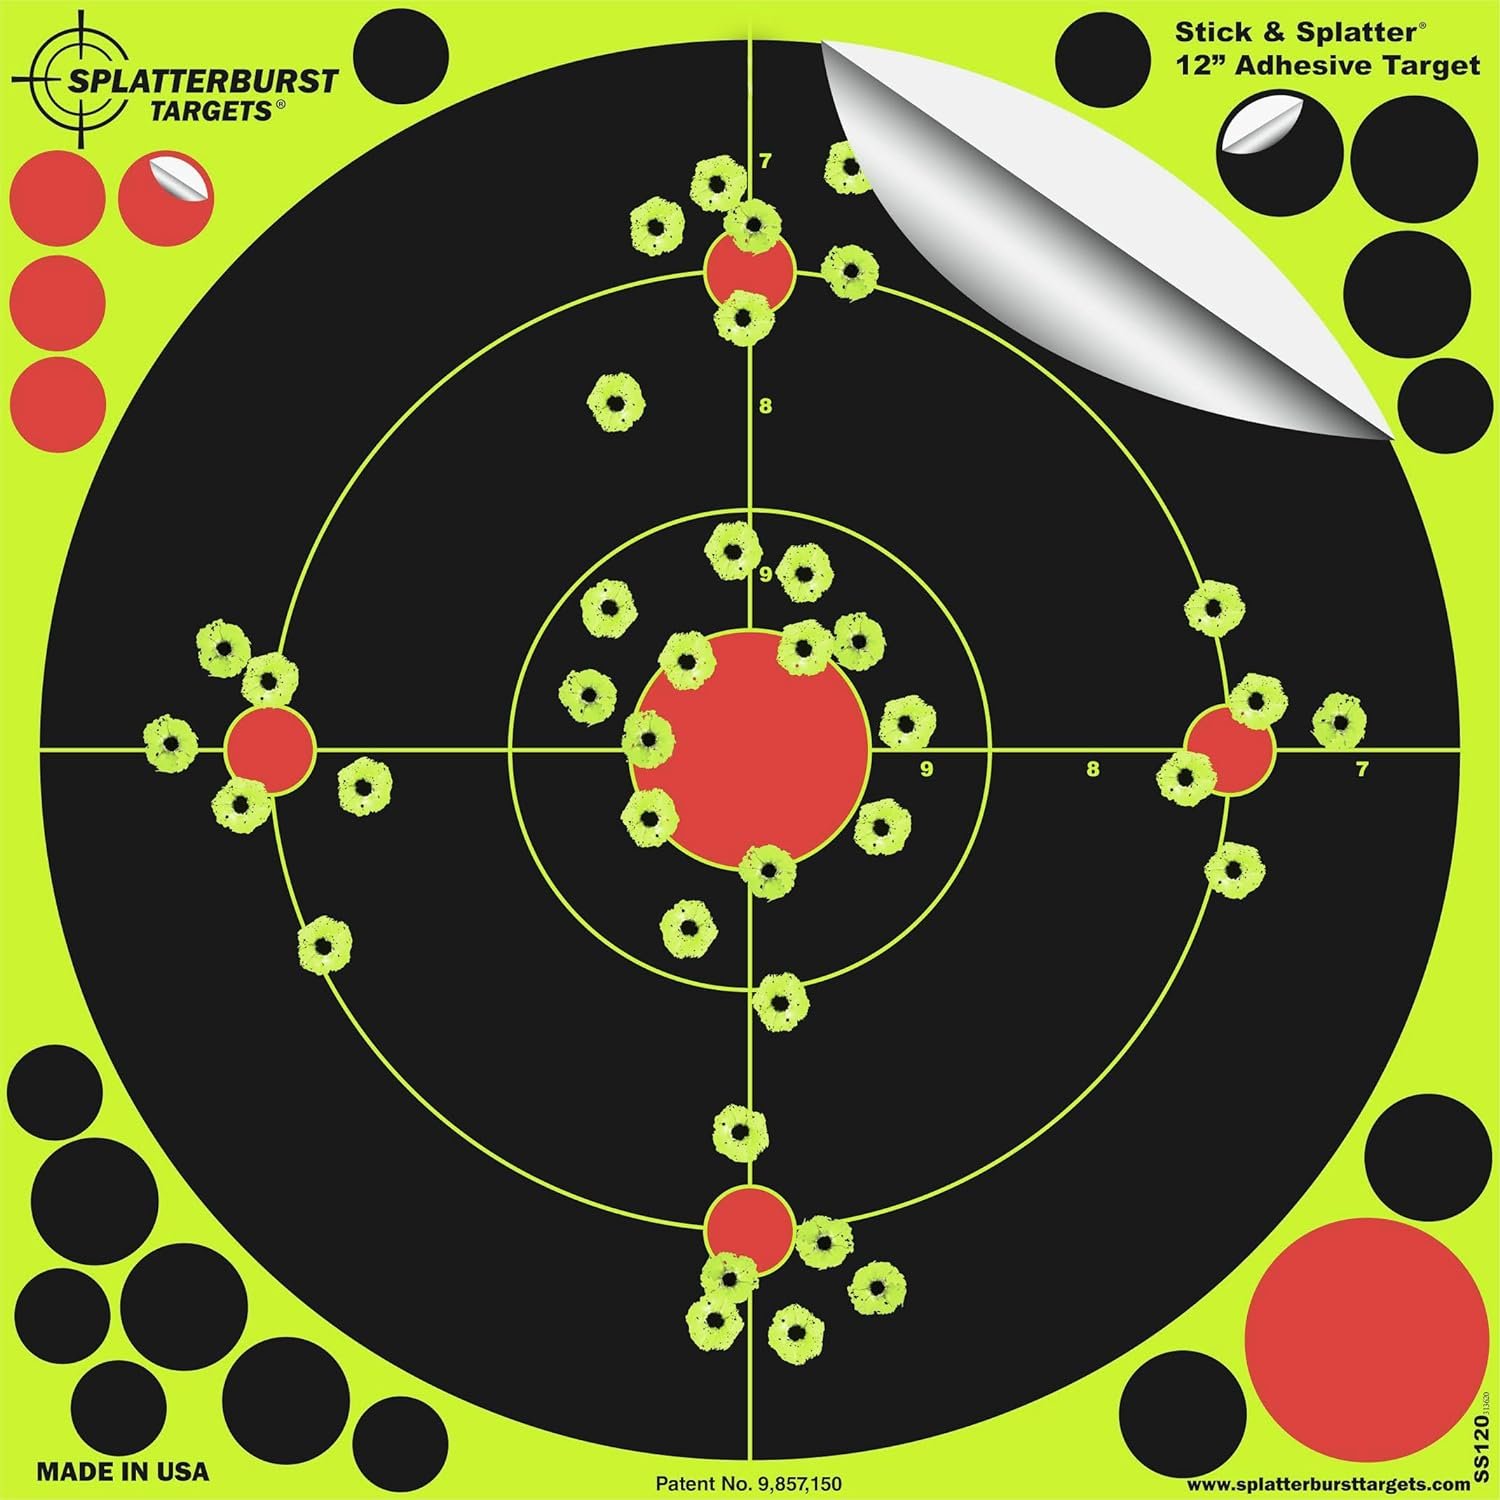 Splatterburst Targets 12-inch Stick & Splatter Self Adhesive Shooting Targets Review